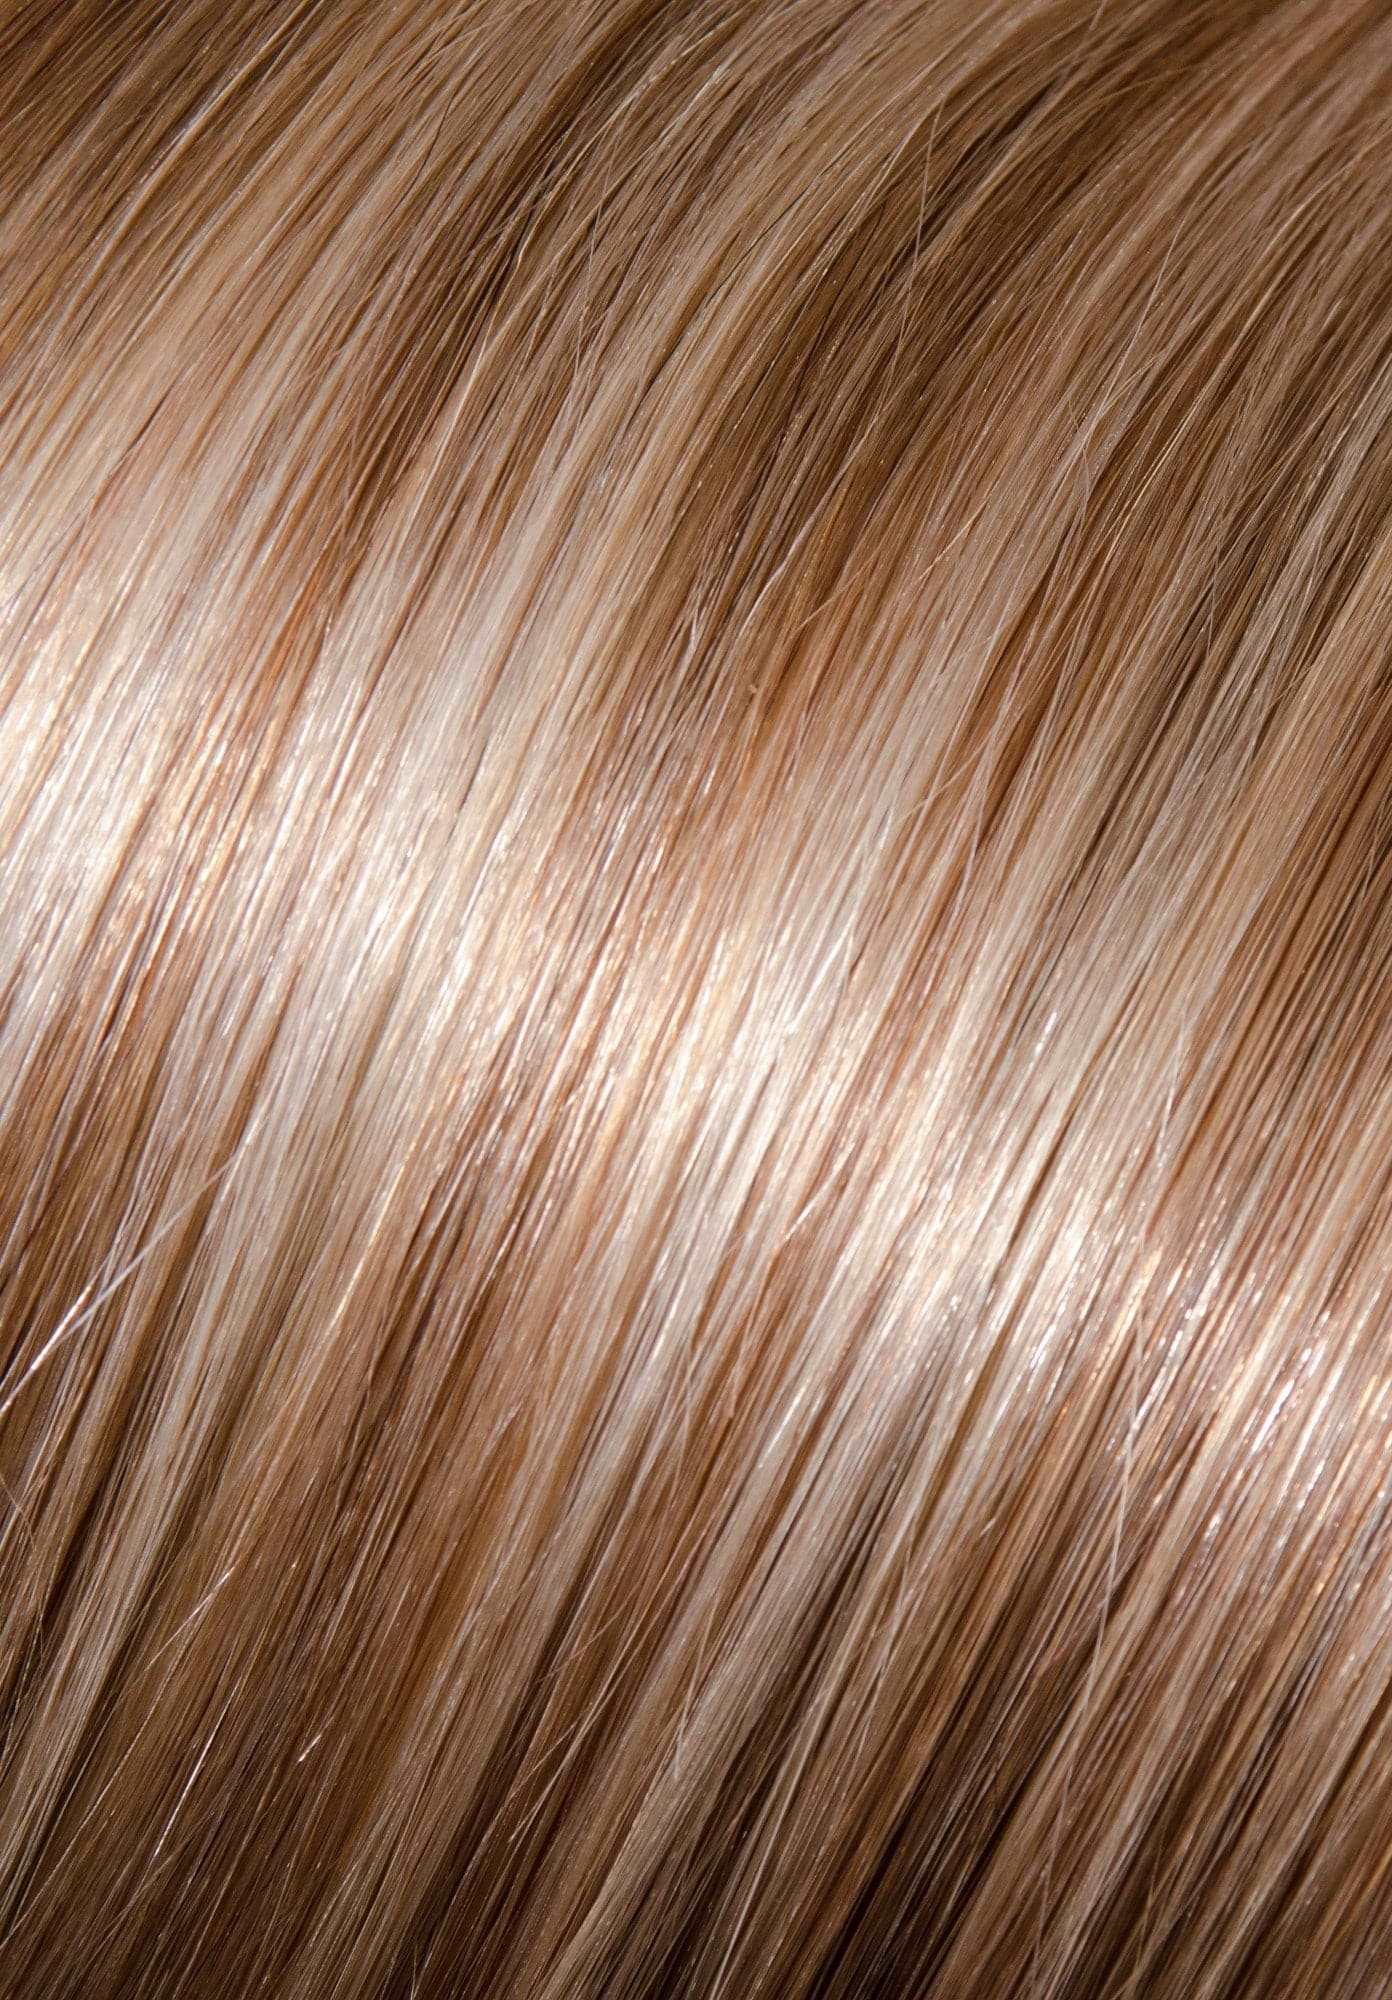 16" I-Link Pro Straight #12/600 (Light Ash/Blond) - Donna Bella Hair